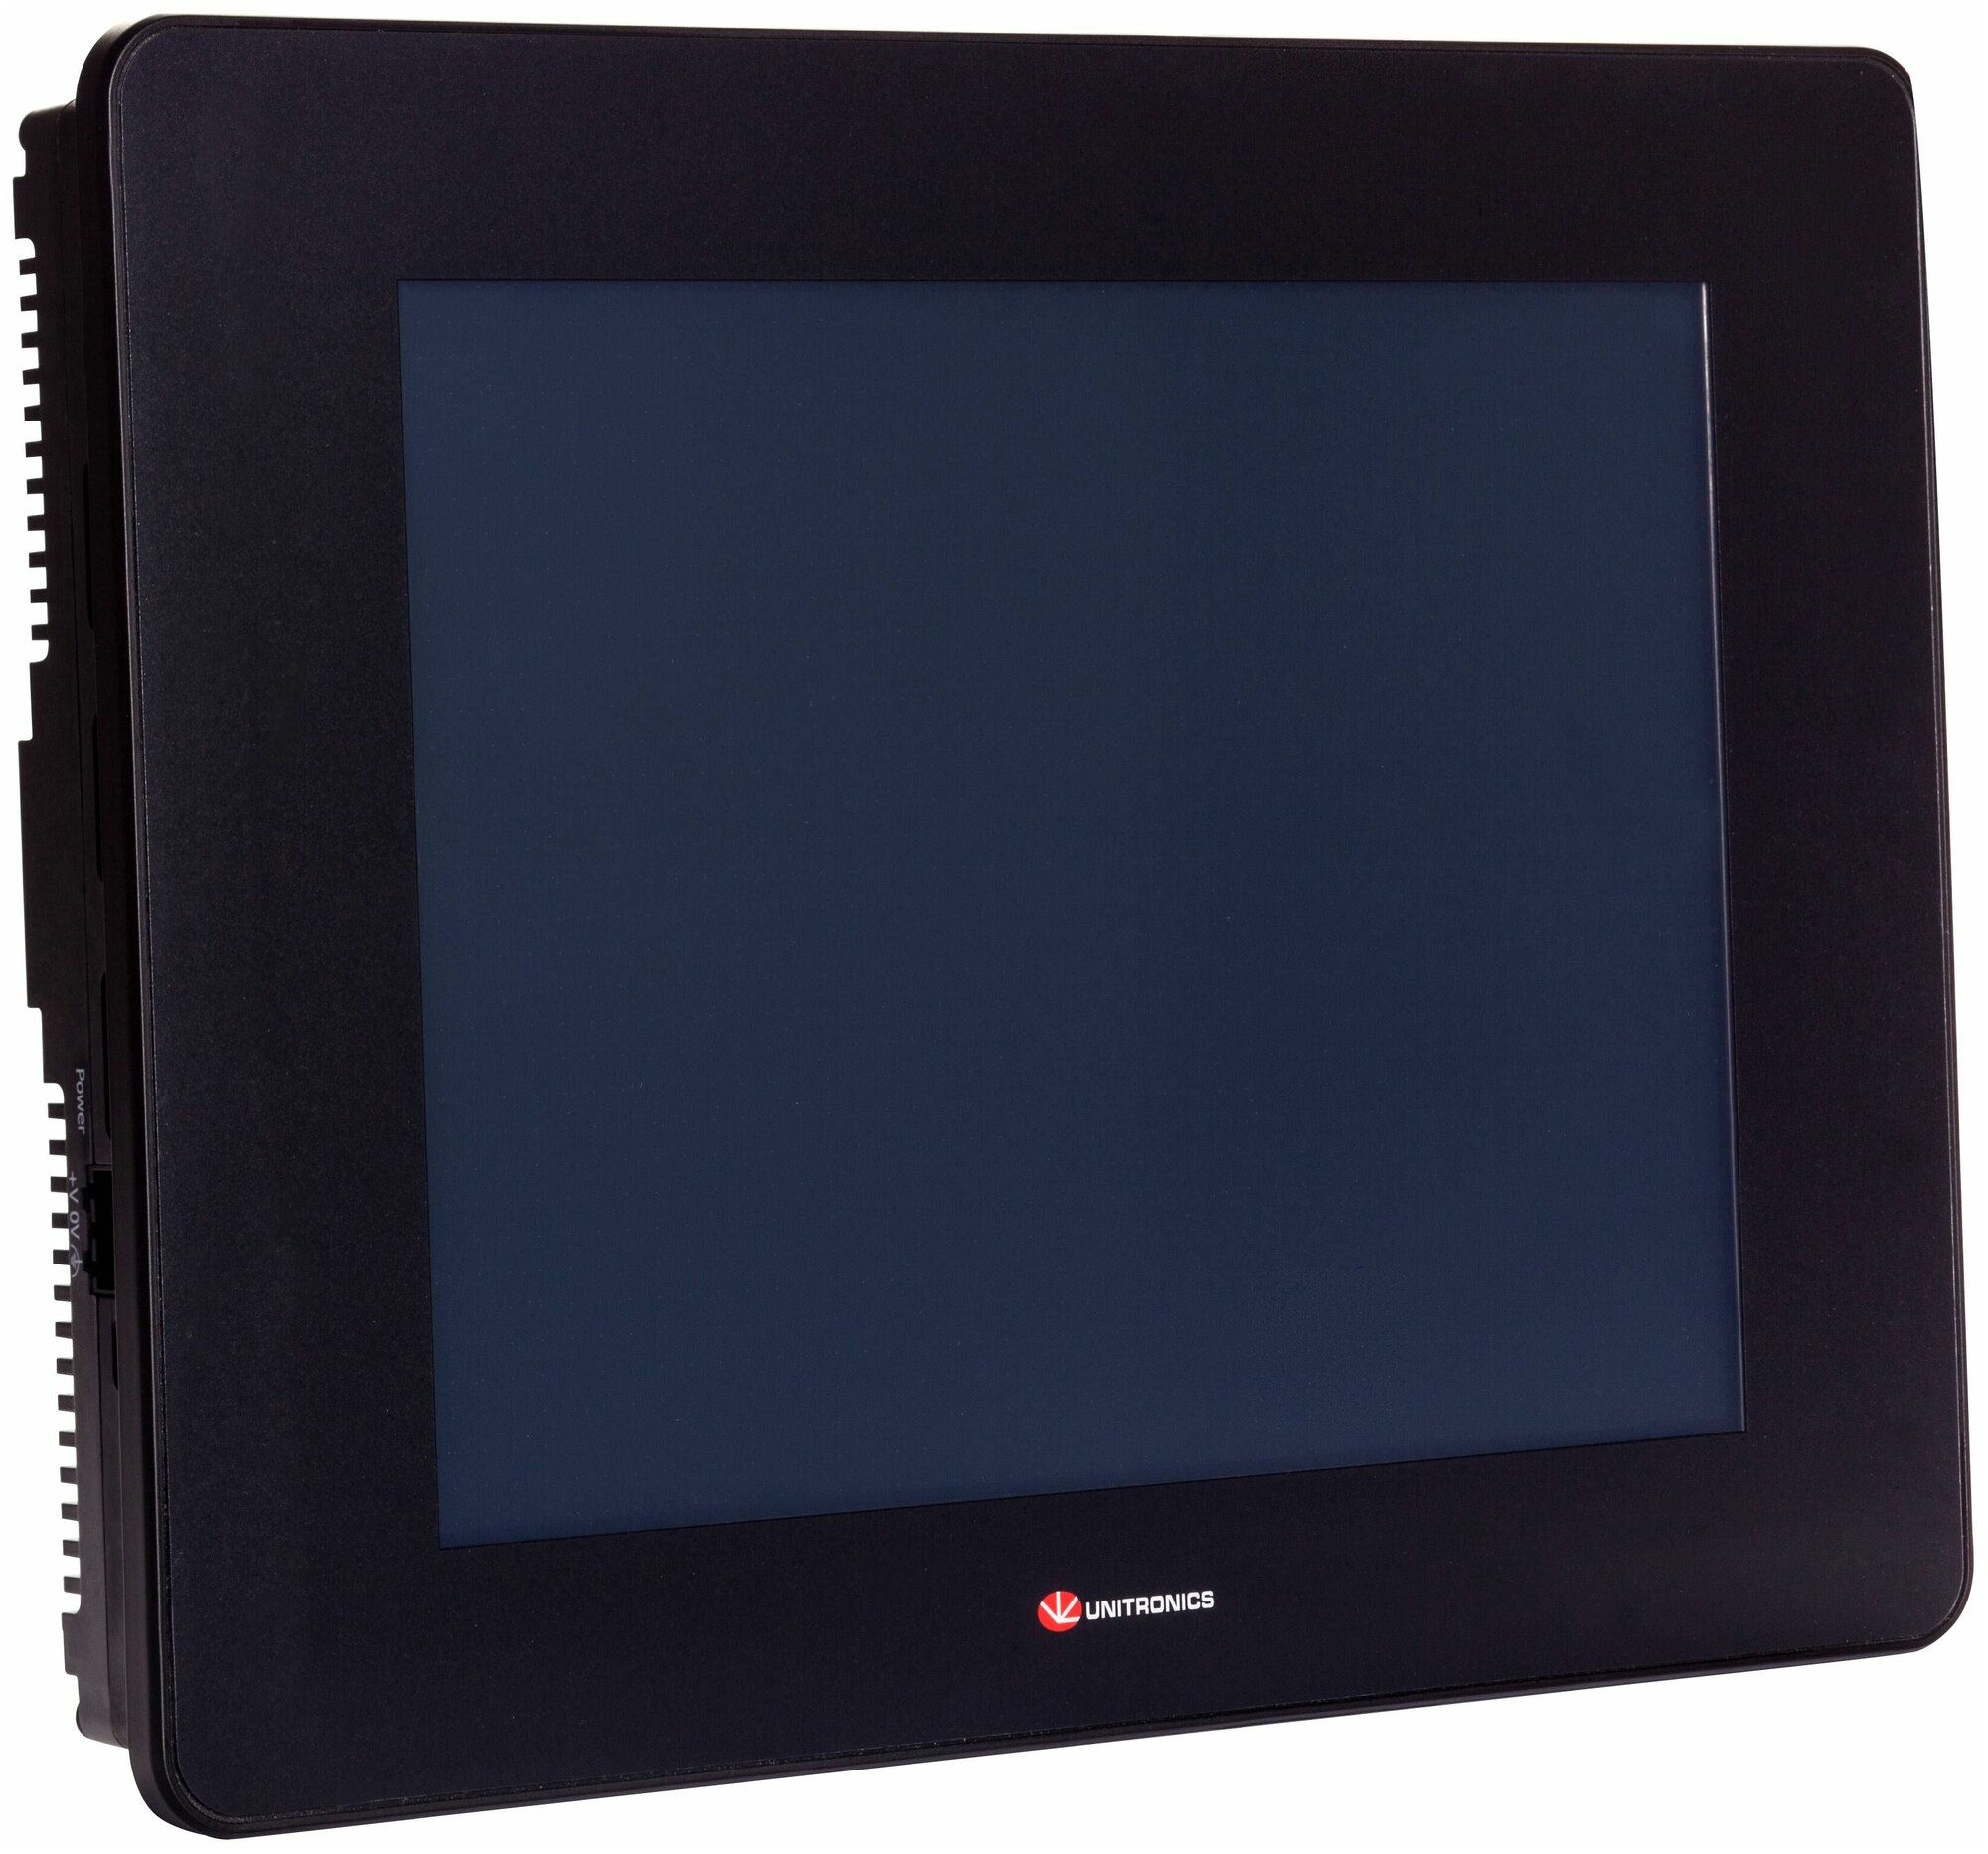 USP-156-B10 Контроллер+HMI Unistream, экран 15,6 дюйма, 2 Ethernet, SD, 2 USB, Аудиовыход